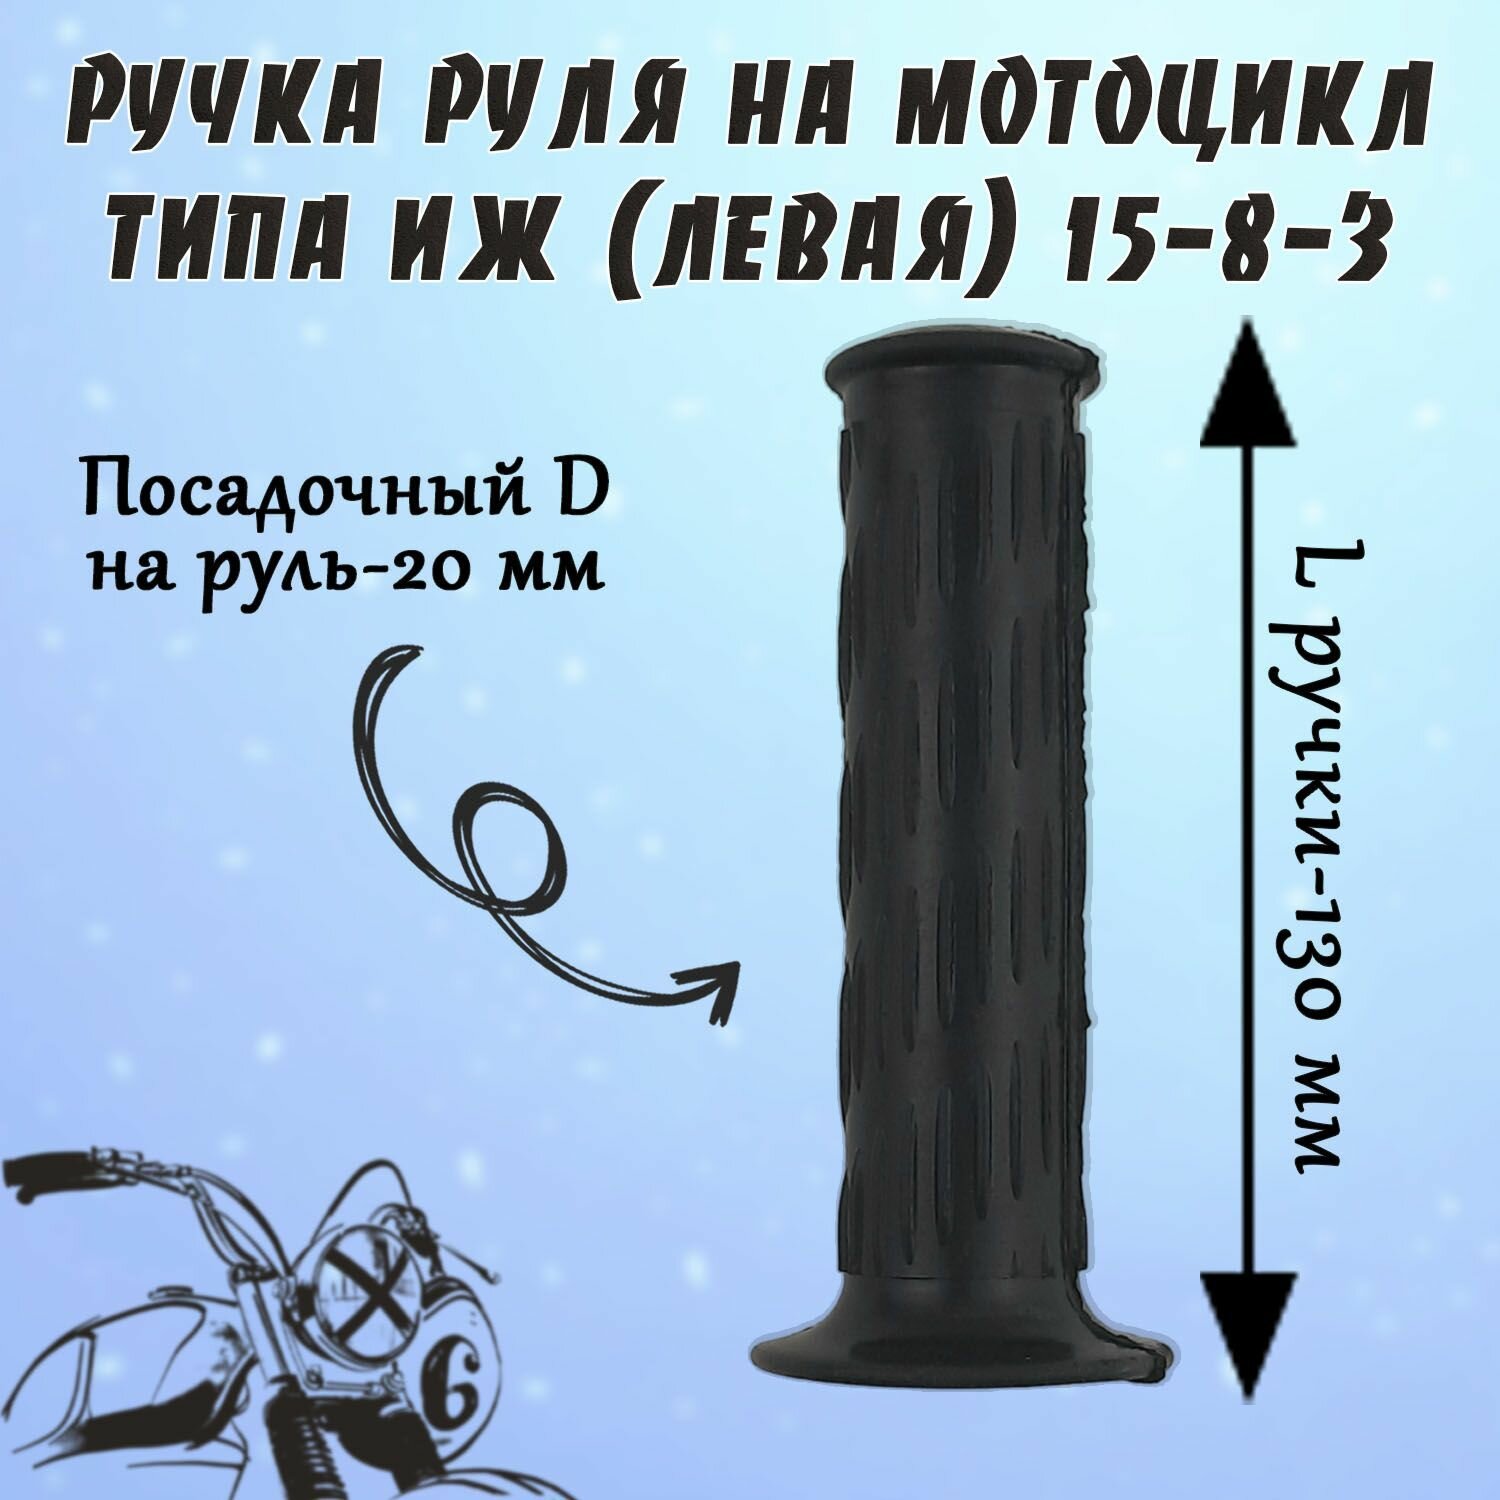 Ручка руля на мотоцикл типа Иж (левая) 15-8-3